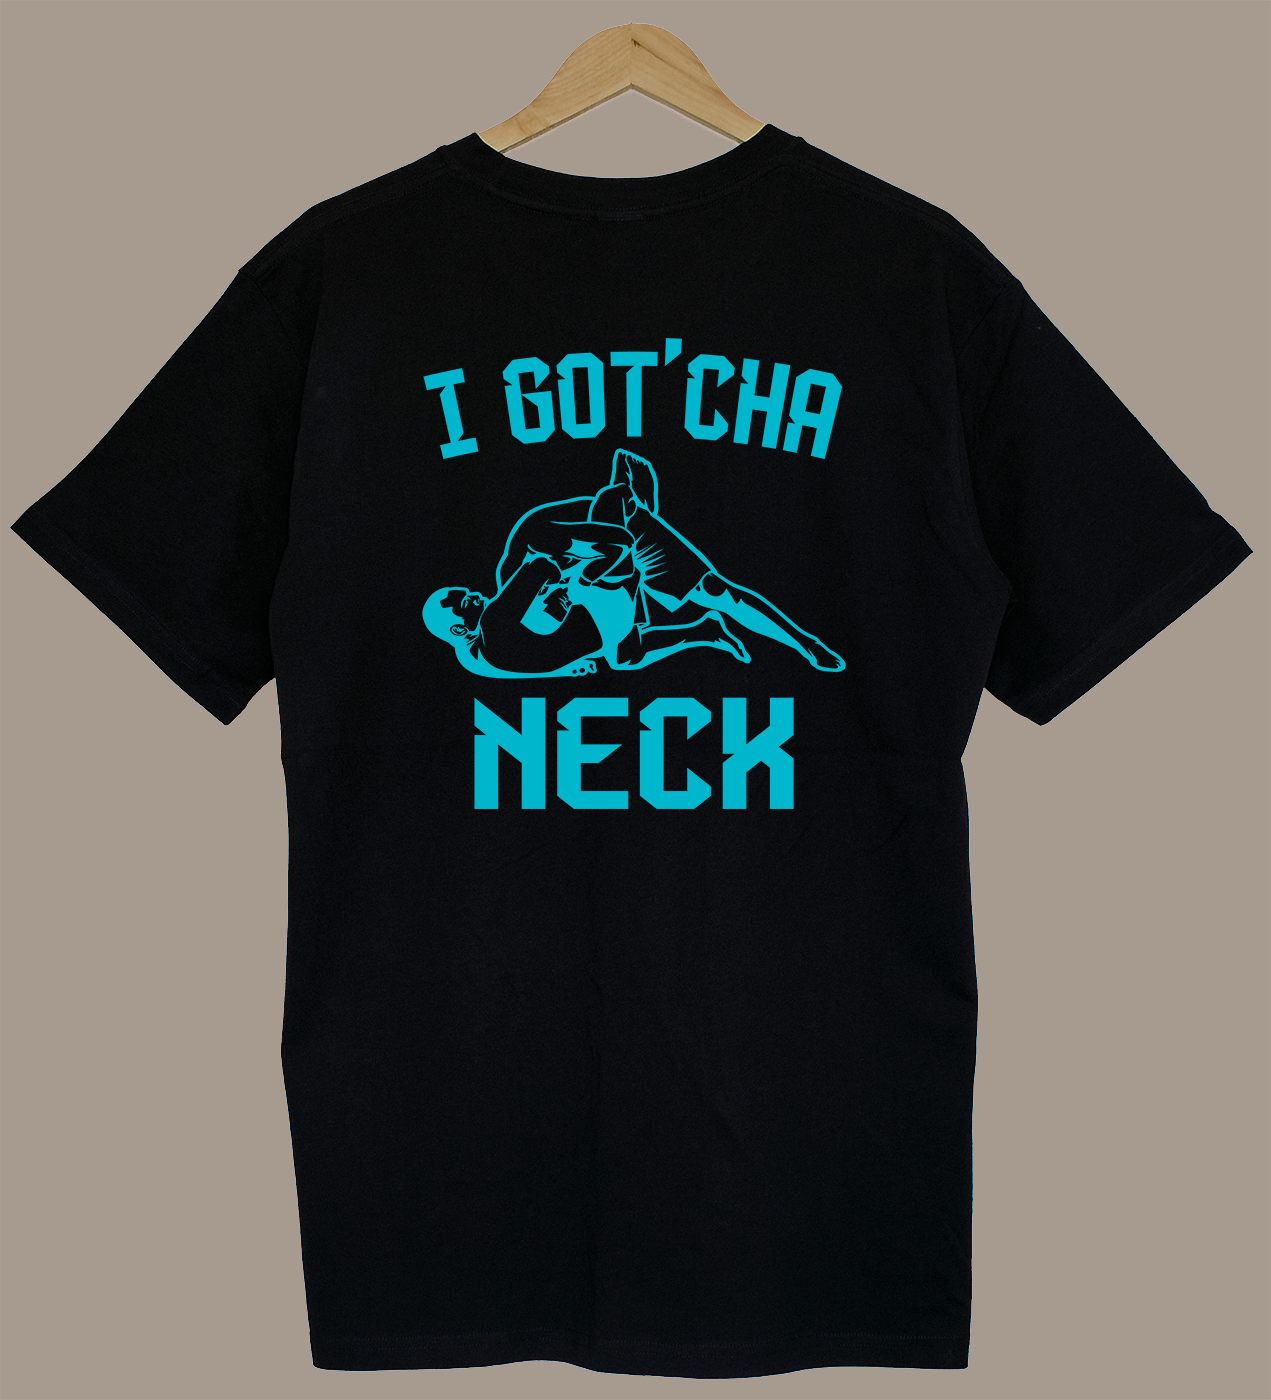 I Got'Cha Neck - Black/Ocean